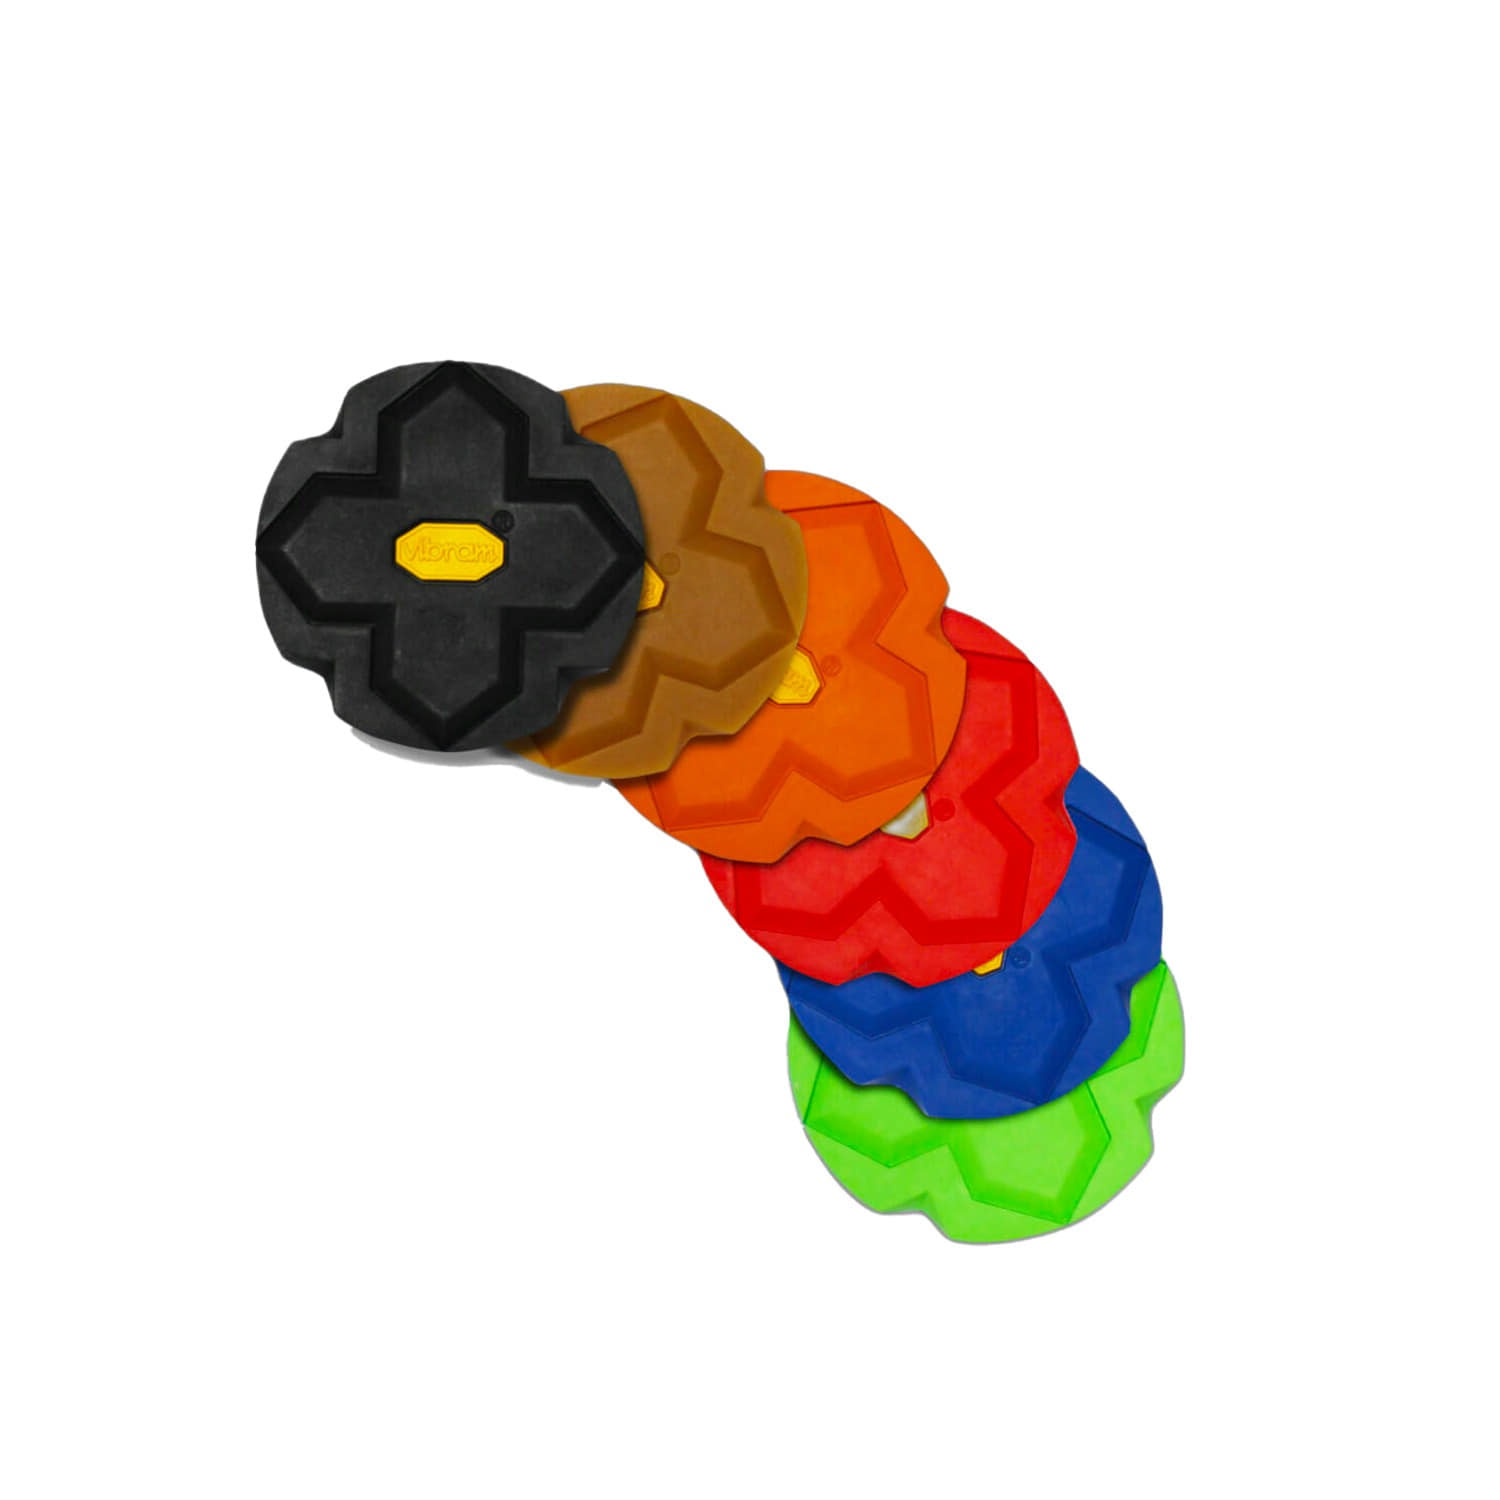 Vibram Coaster Solid Color Design